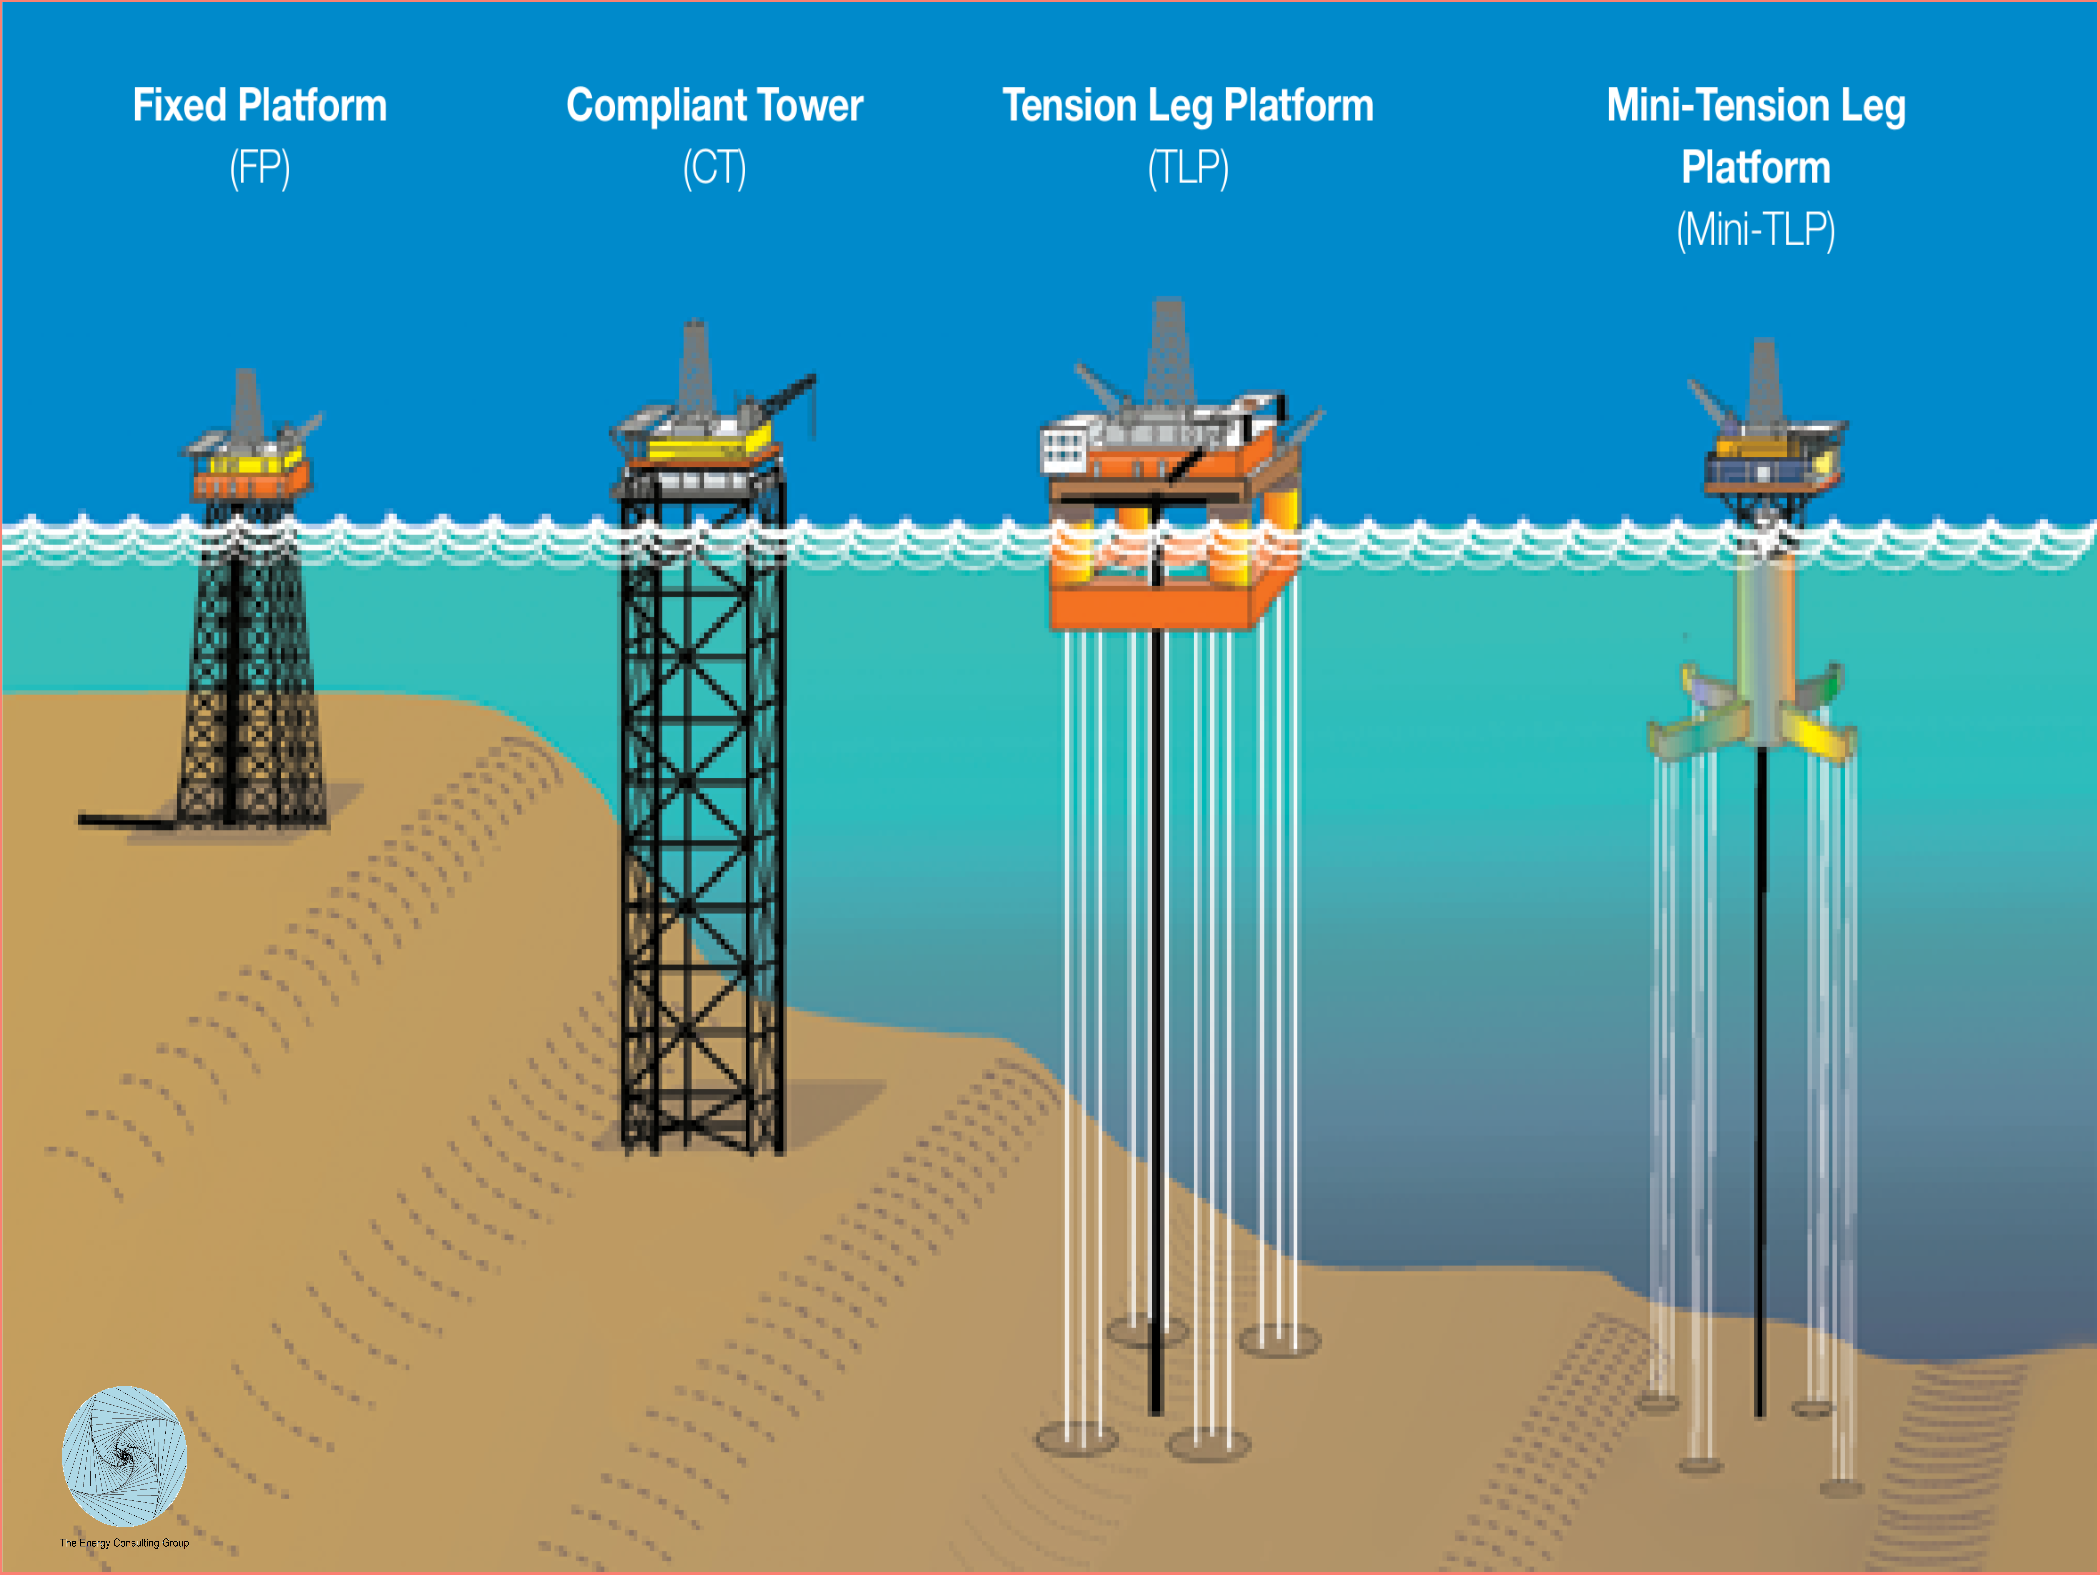 Fixed platform. Offshore Oil Rig схемы. Типы нефтяных платформ. Стационарная нефтяная платформа. Типы морских буровых платформ.